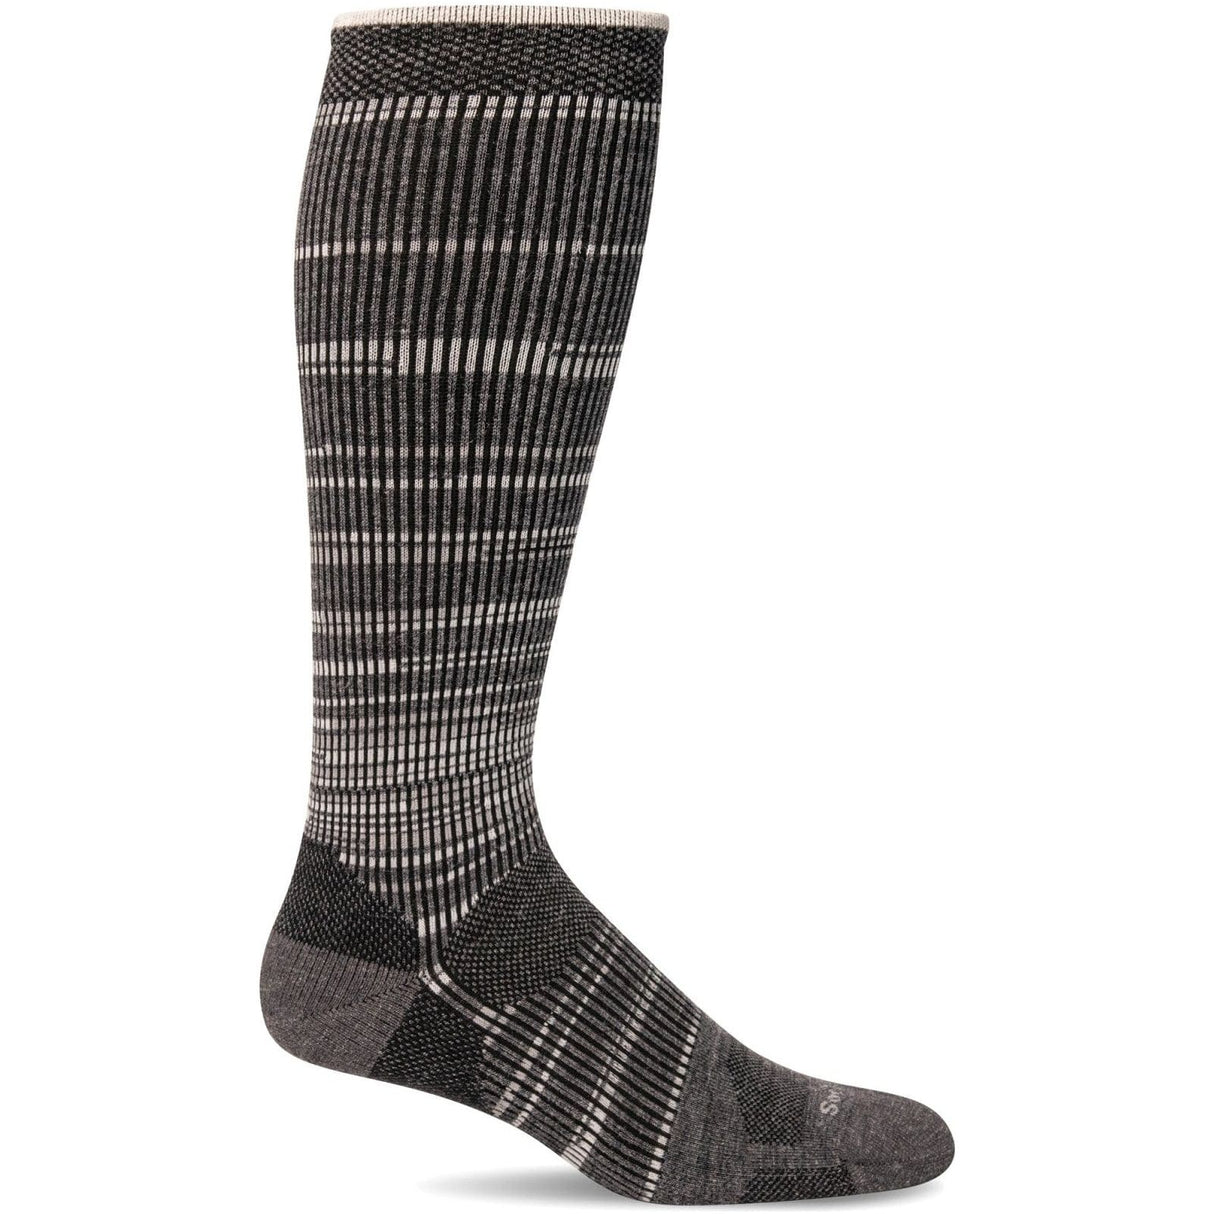 Sockwell Mens Sprint Moderate Compression OTC Socks  -  Medium/Large / Charcoal